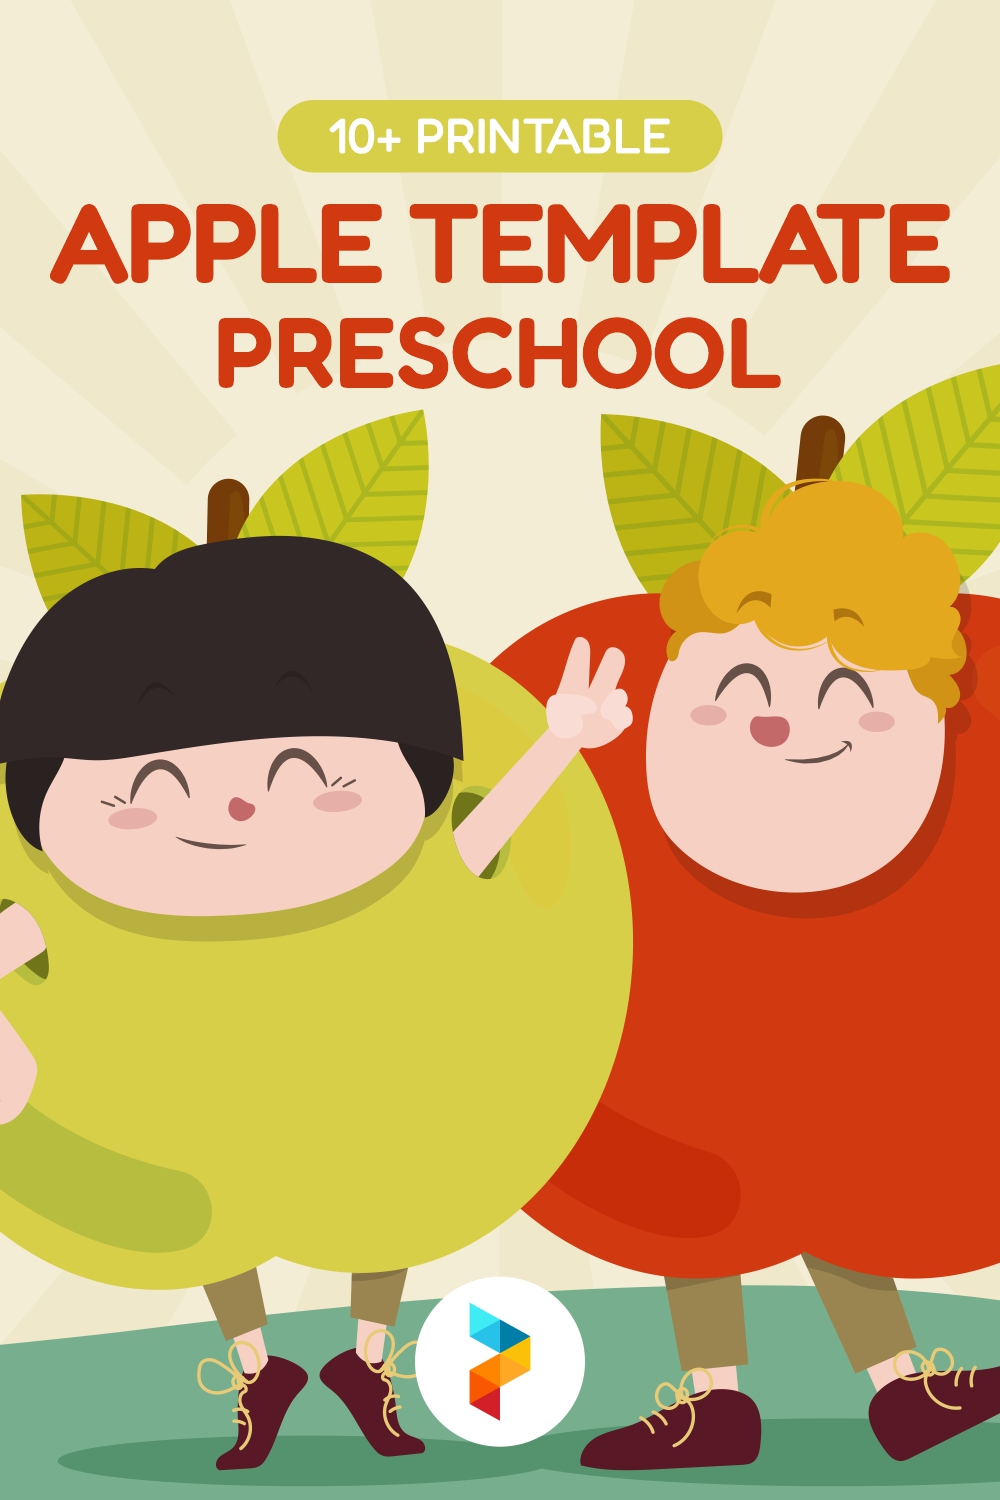 Apple Template Preschool